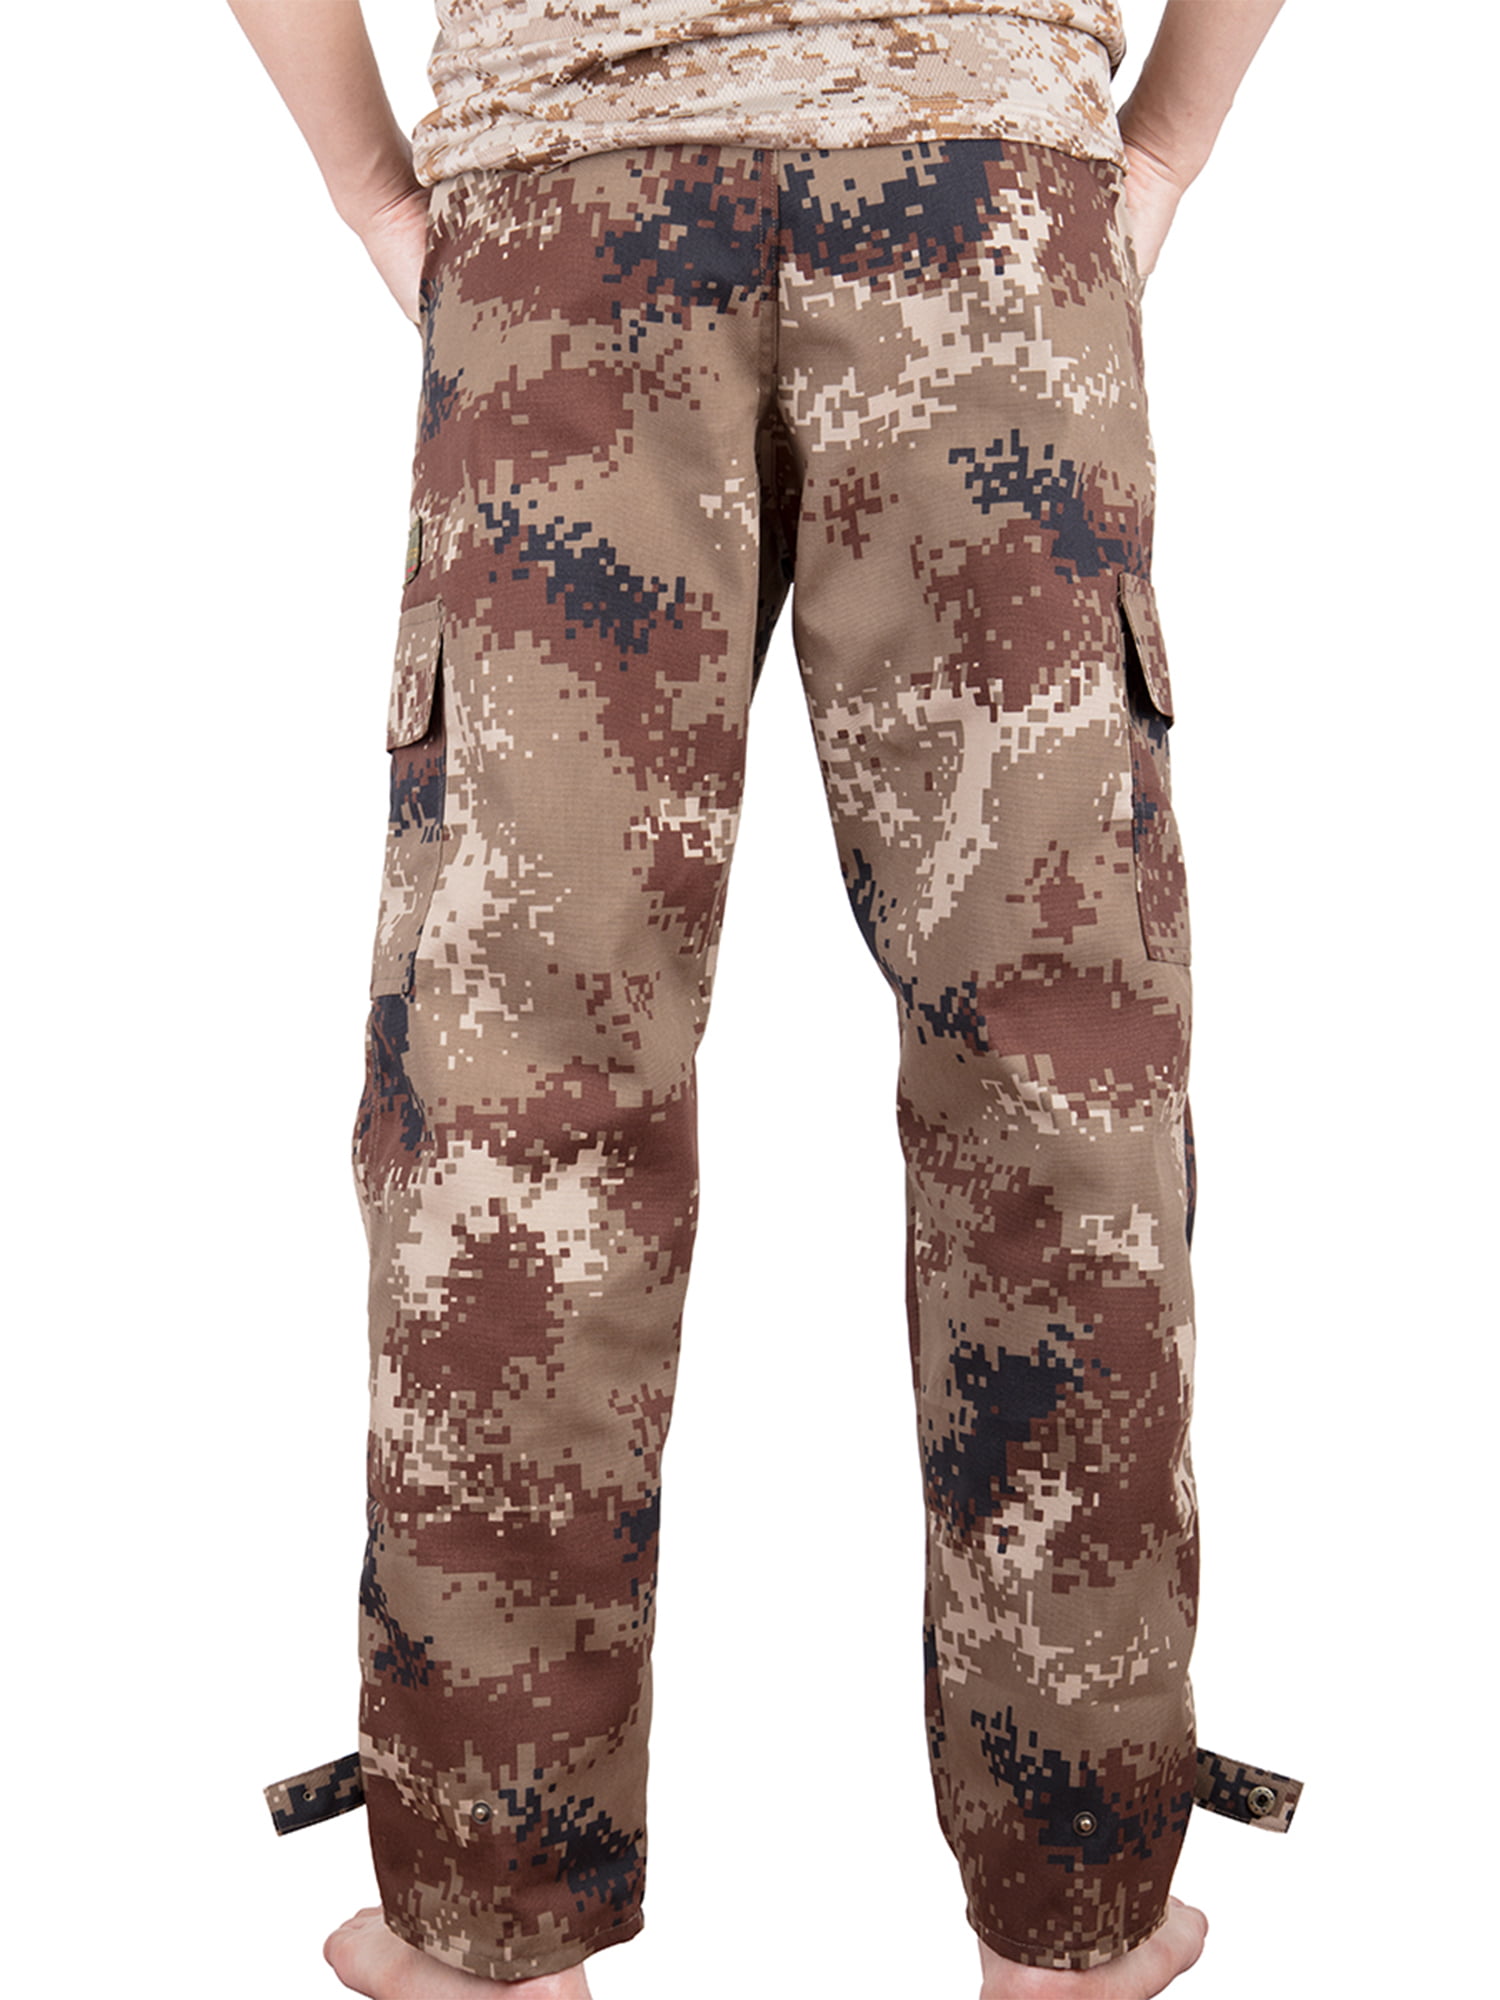 USGI BDU Desert Camo Trousers Cargo Pocket Pants